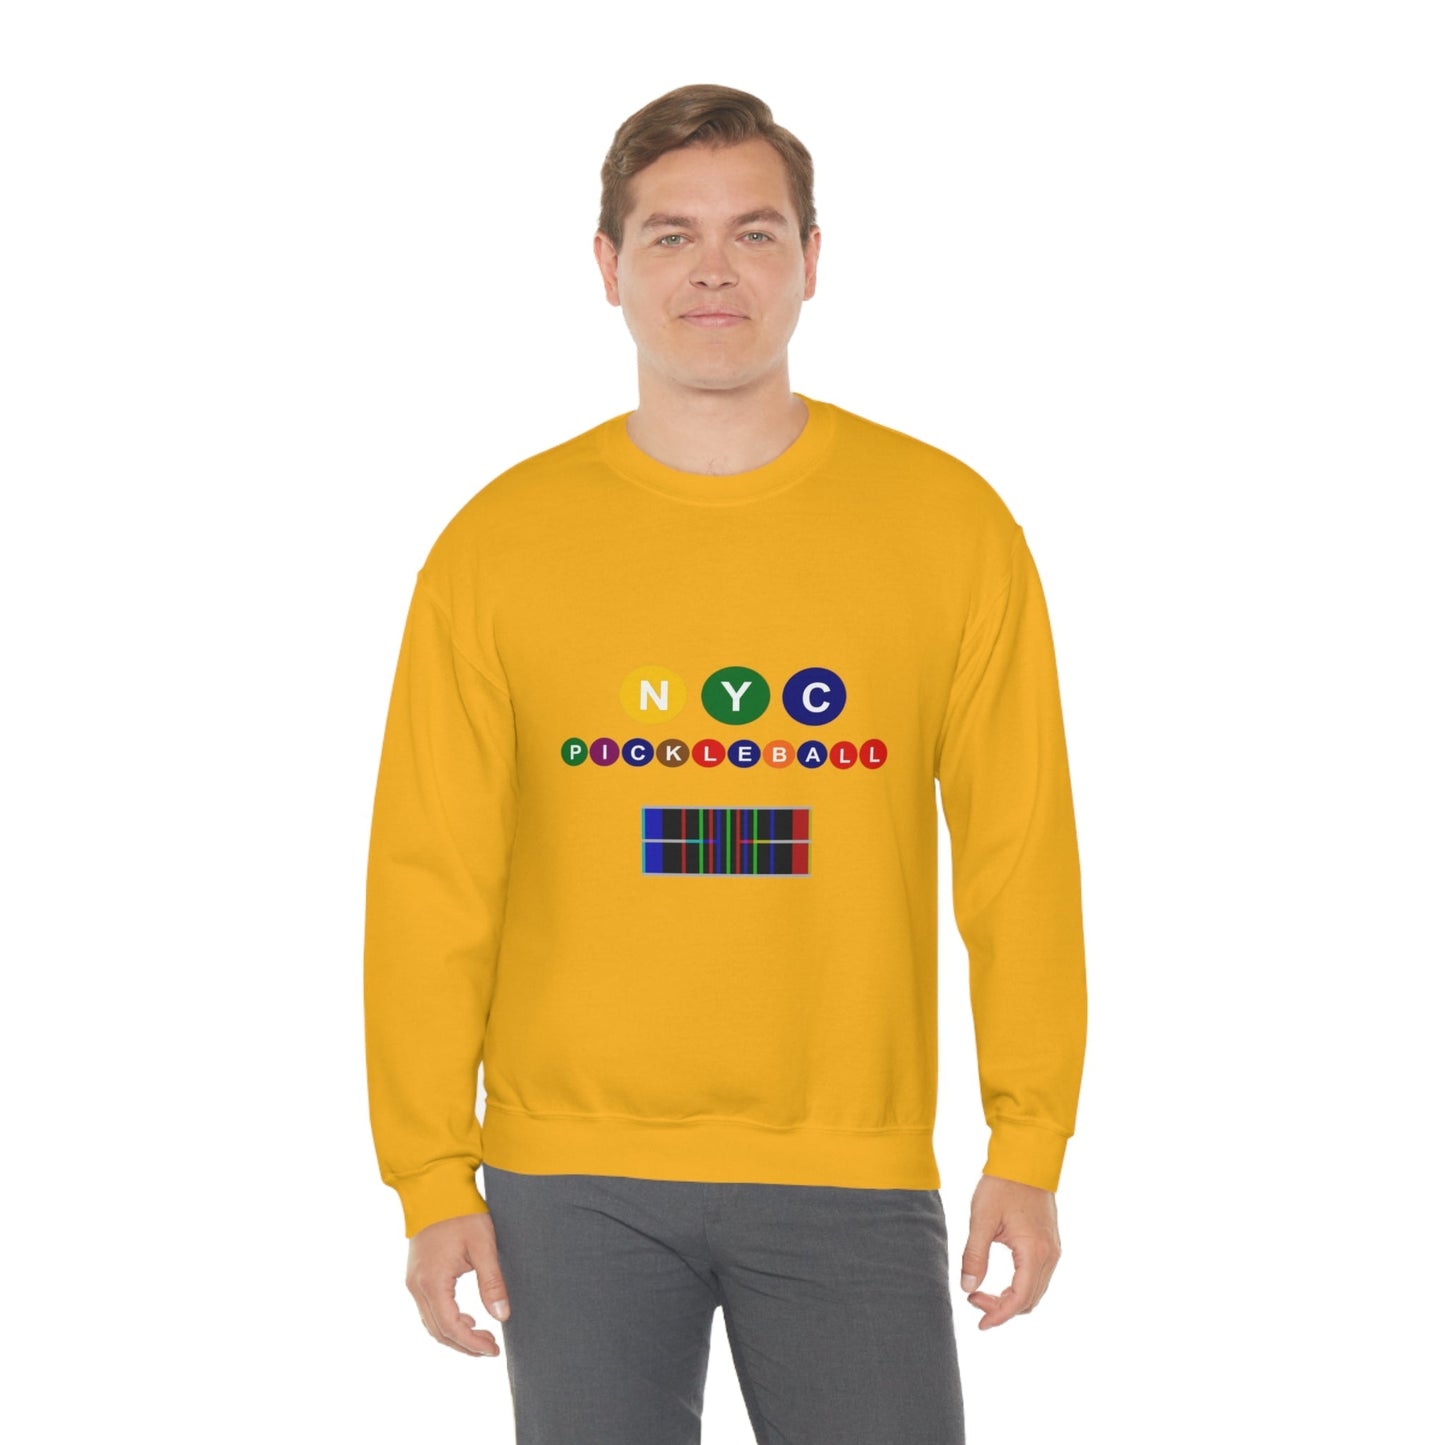 'NYC Pickleball' Unisex Crewneck Sweatshirt